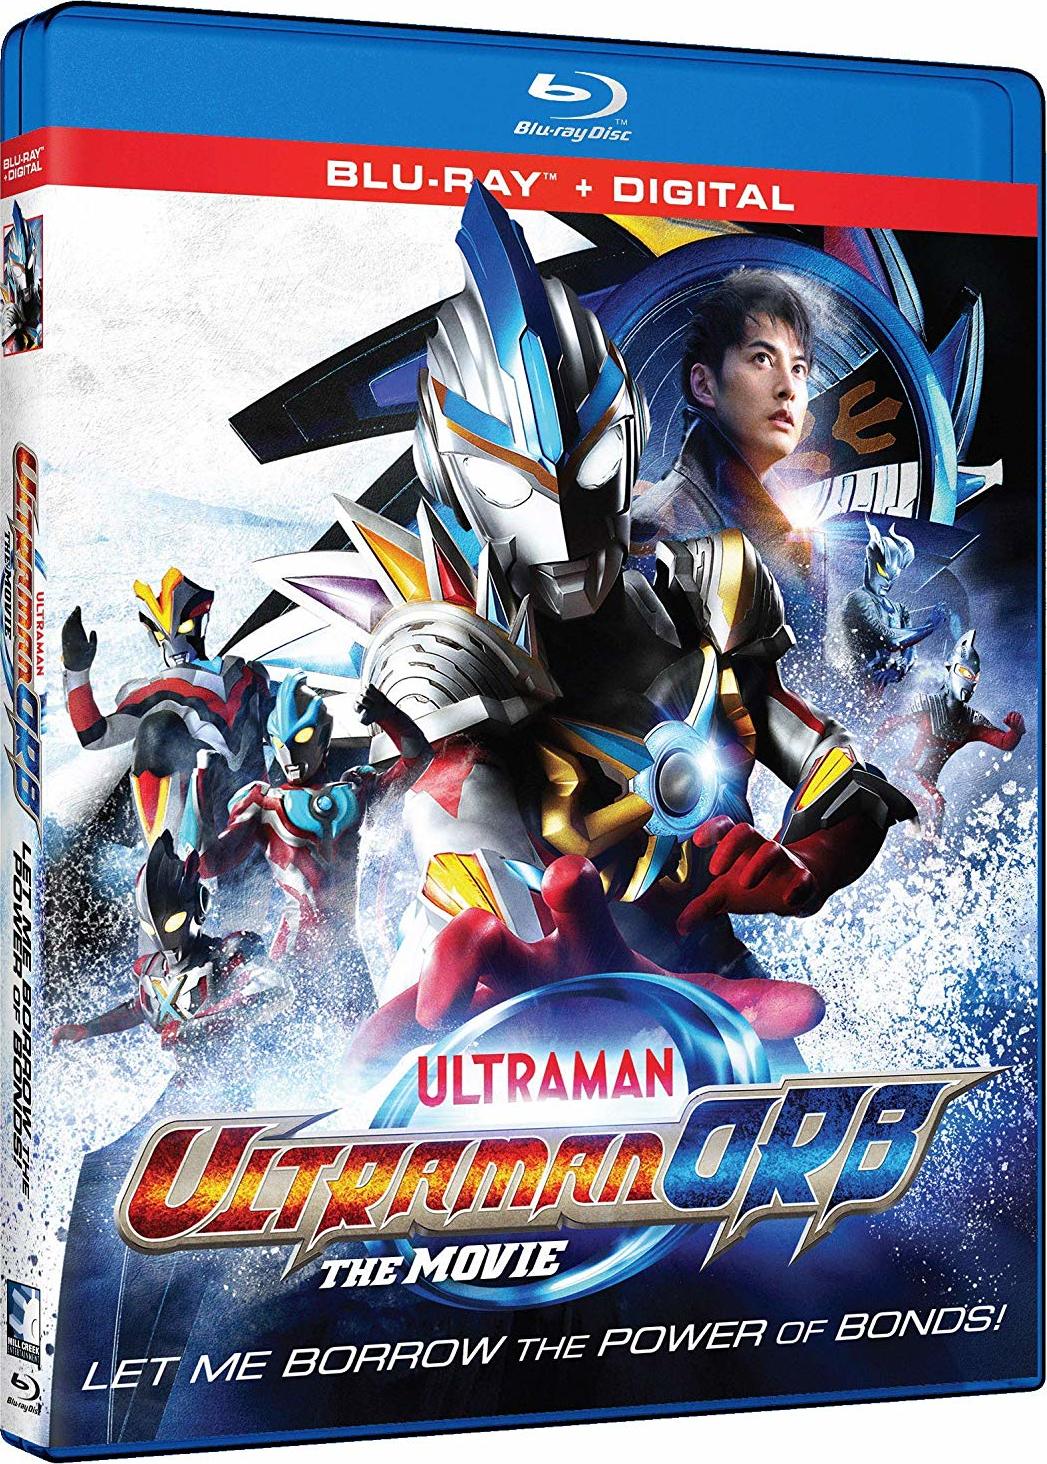 Ultraman Orb The Movie Lend Me The Power Of Bonds Blu Ray Release Date March 17 劇場版 ウルトラマンオーブ 絆の力 おかりします Gekijōban Urutoraman ōbu Kizuna No Chikara Okarishimasu